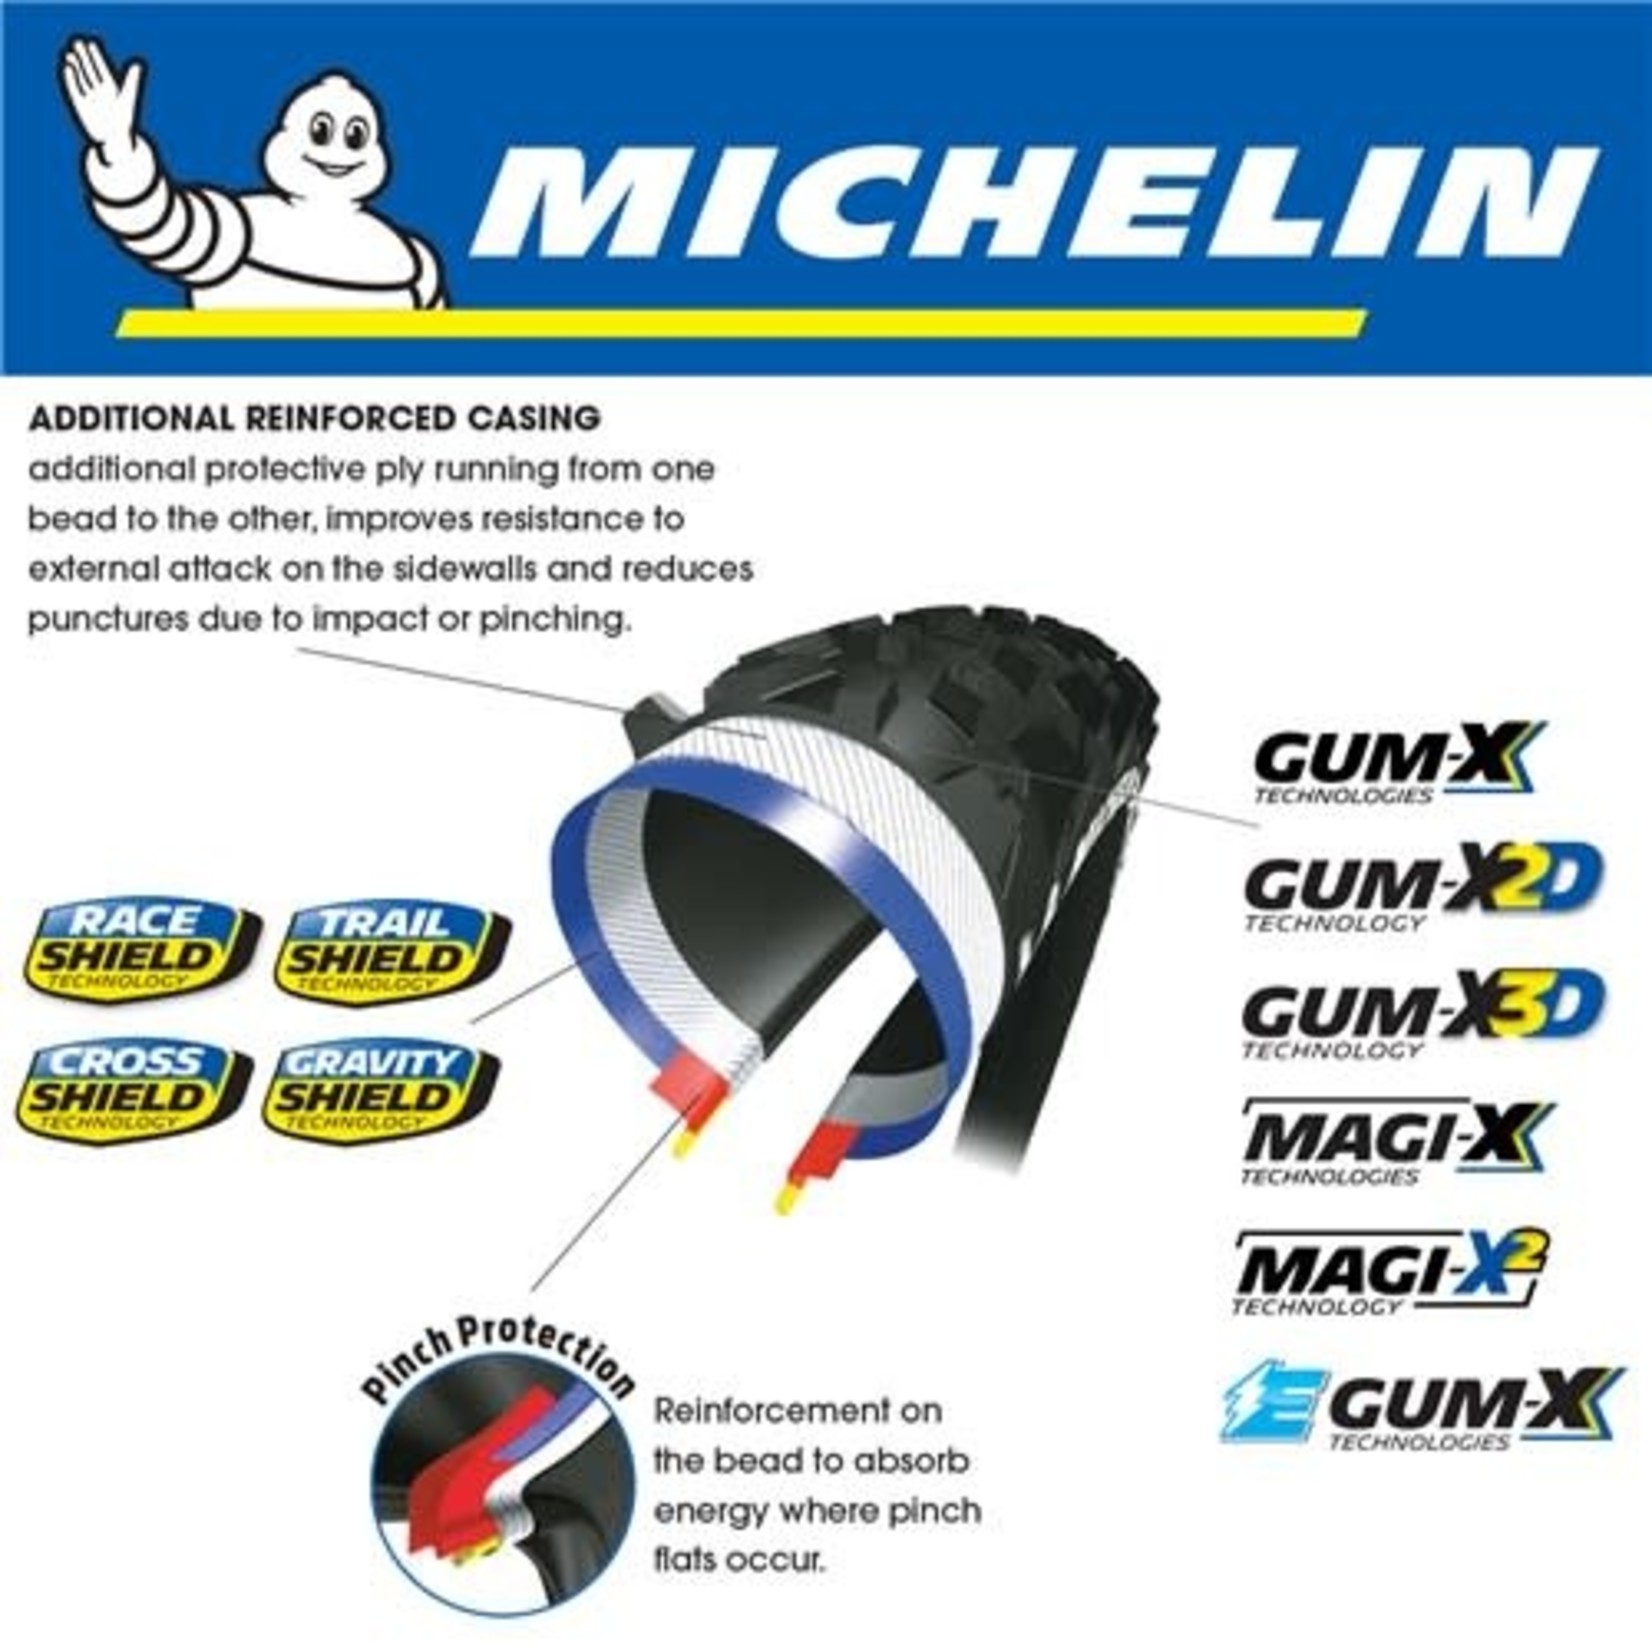 Michelin Michelin Bike Tyre - Wild Enduro Front Magi-X2 - 29" X 2.4" Foldable Tyre - Pair